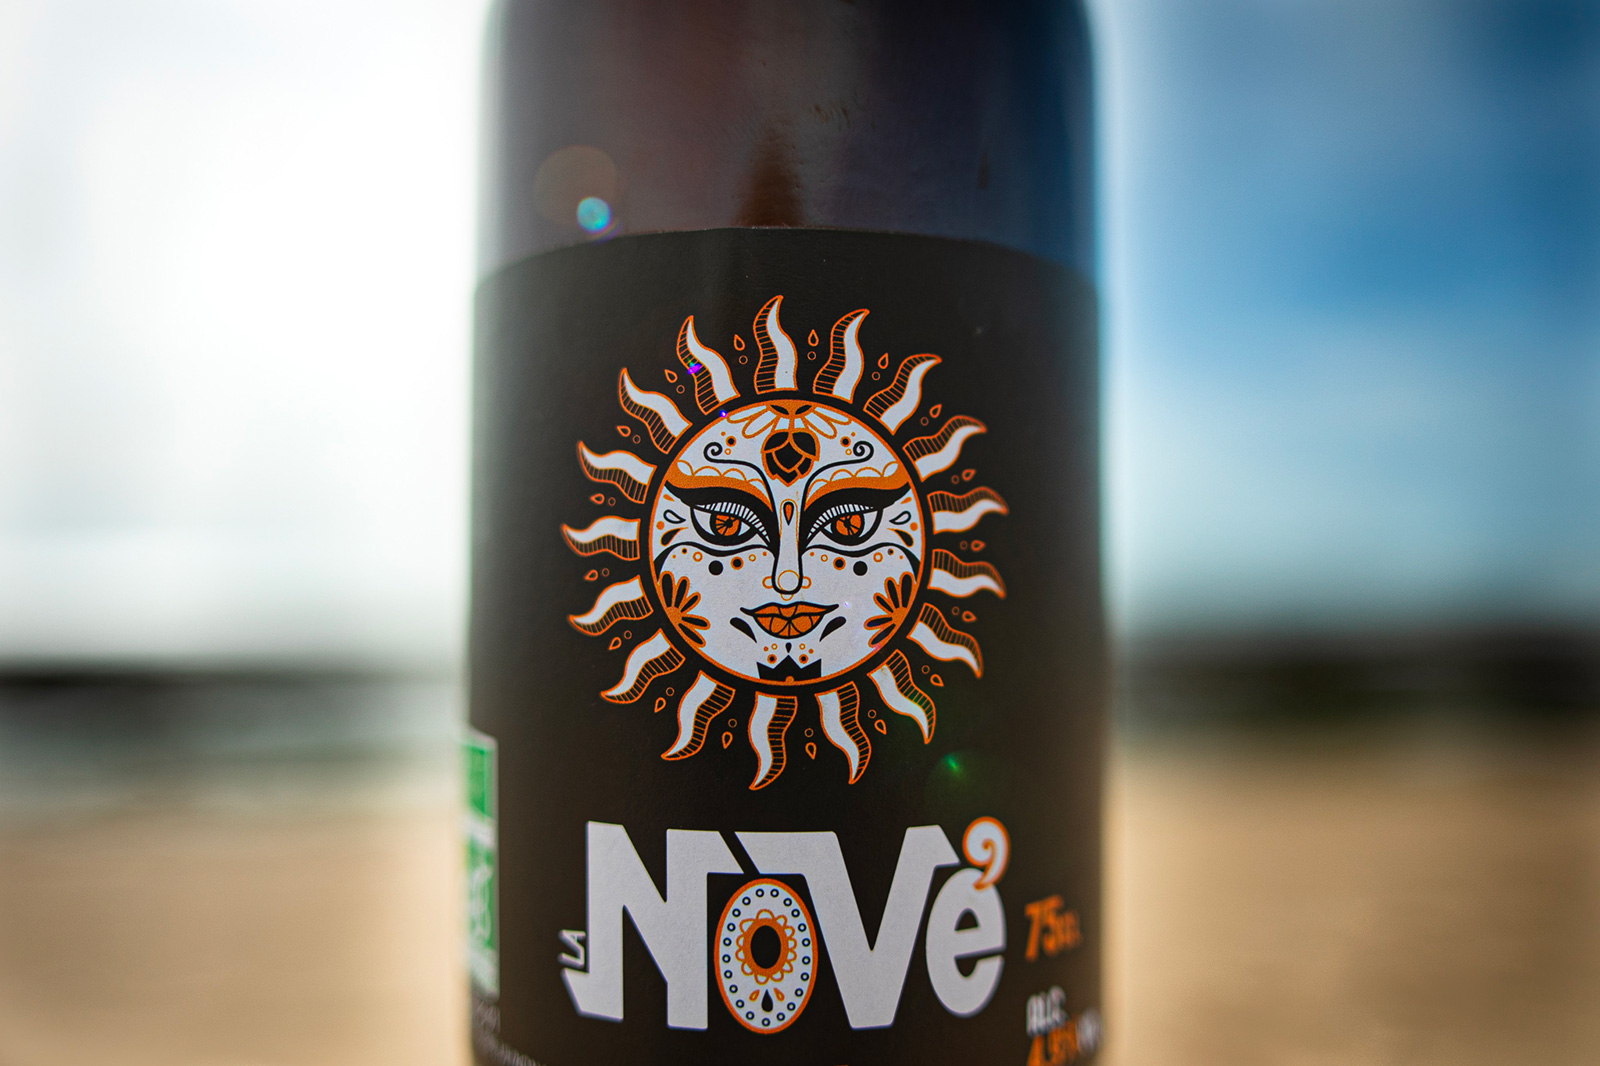 NÒVÉ Organic Craft Brewery